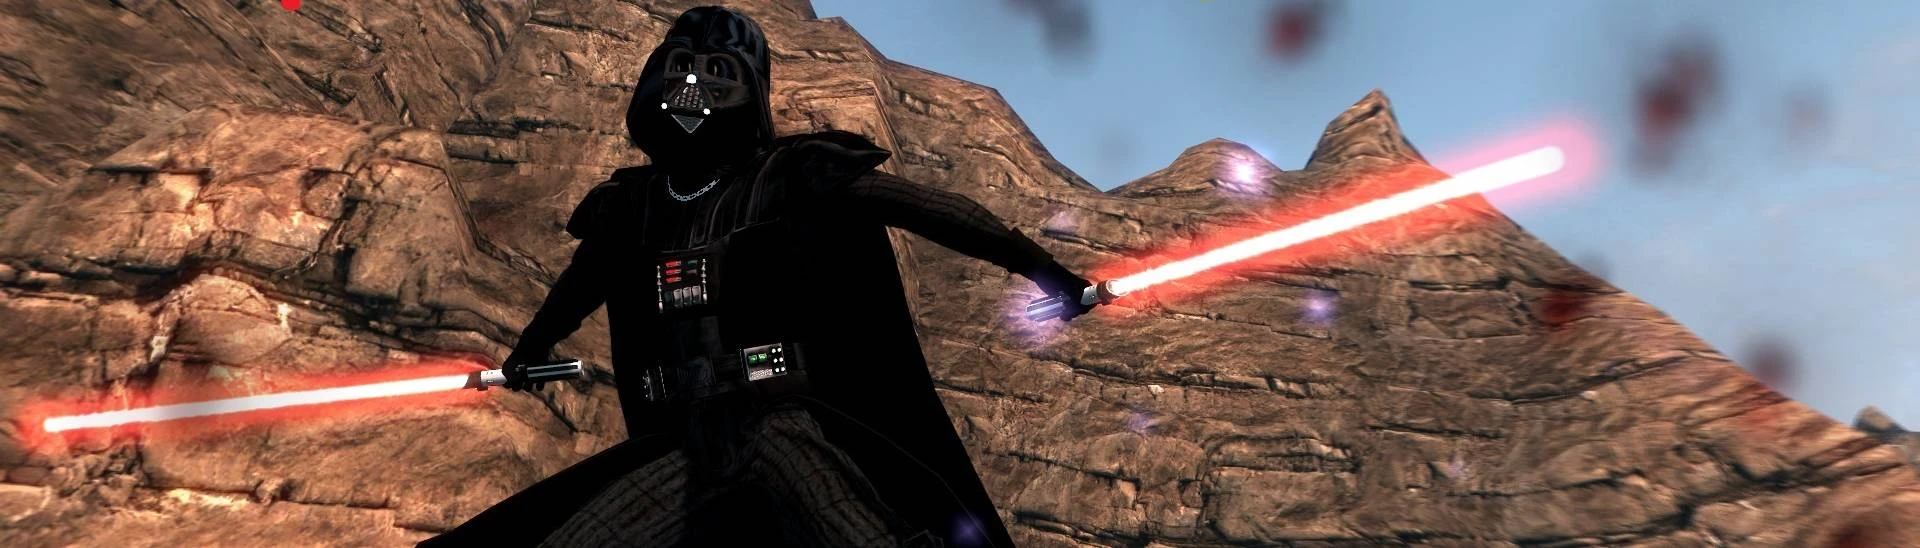 Cyberpunk 2077 Star Wars Mods Add New V Mods and Bike Mod